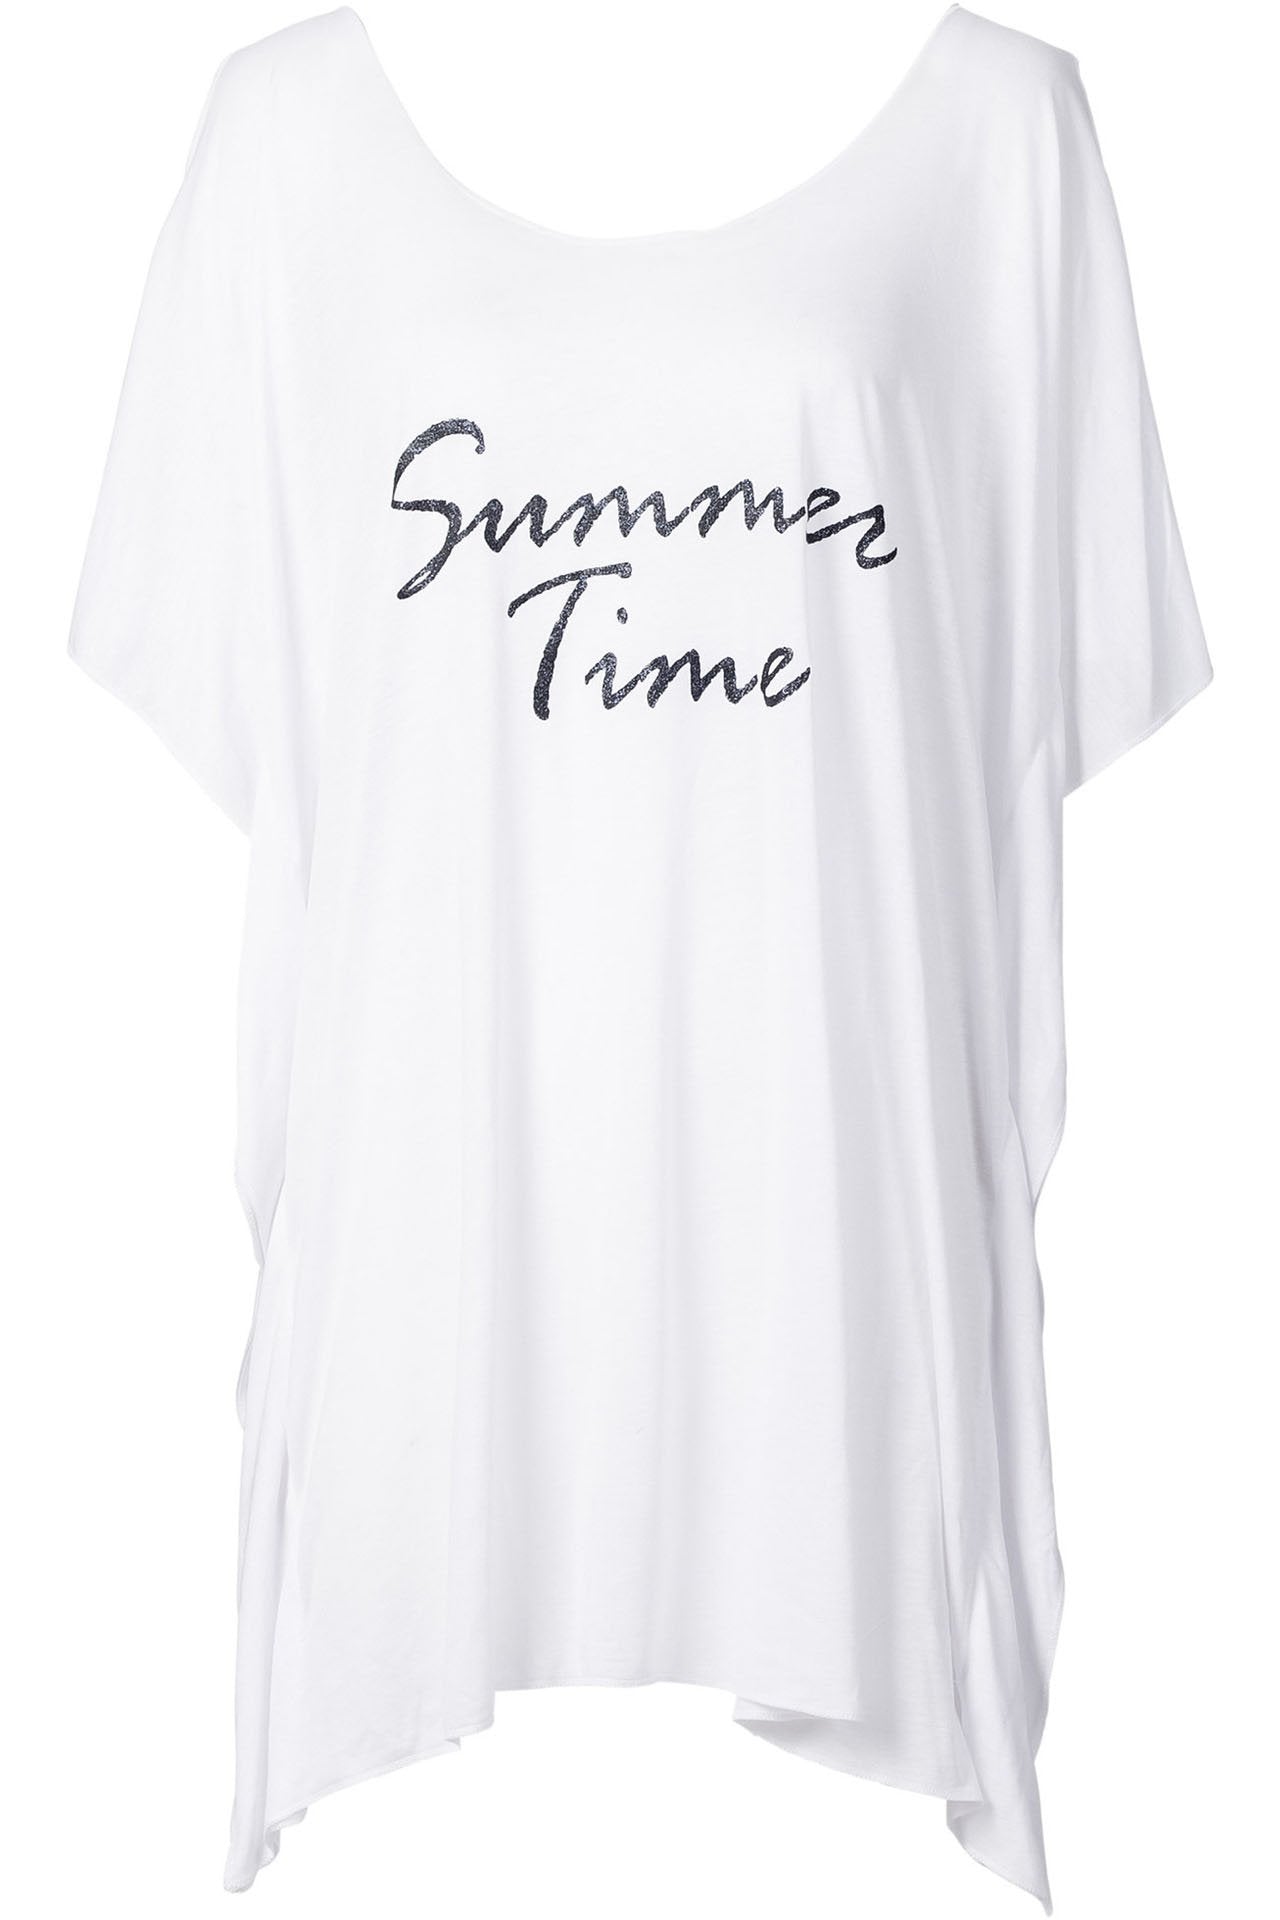 White Cold Shoulder Letter Print Asymmetric T Shirt Dress Beach Cover Up